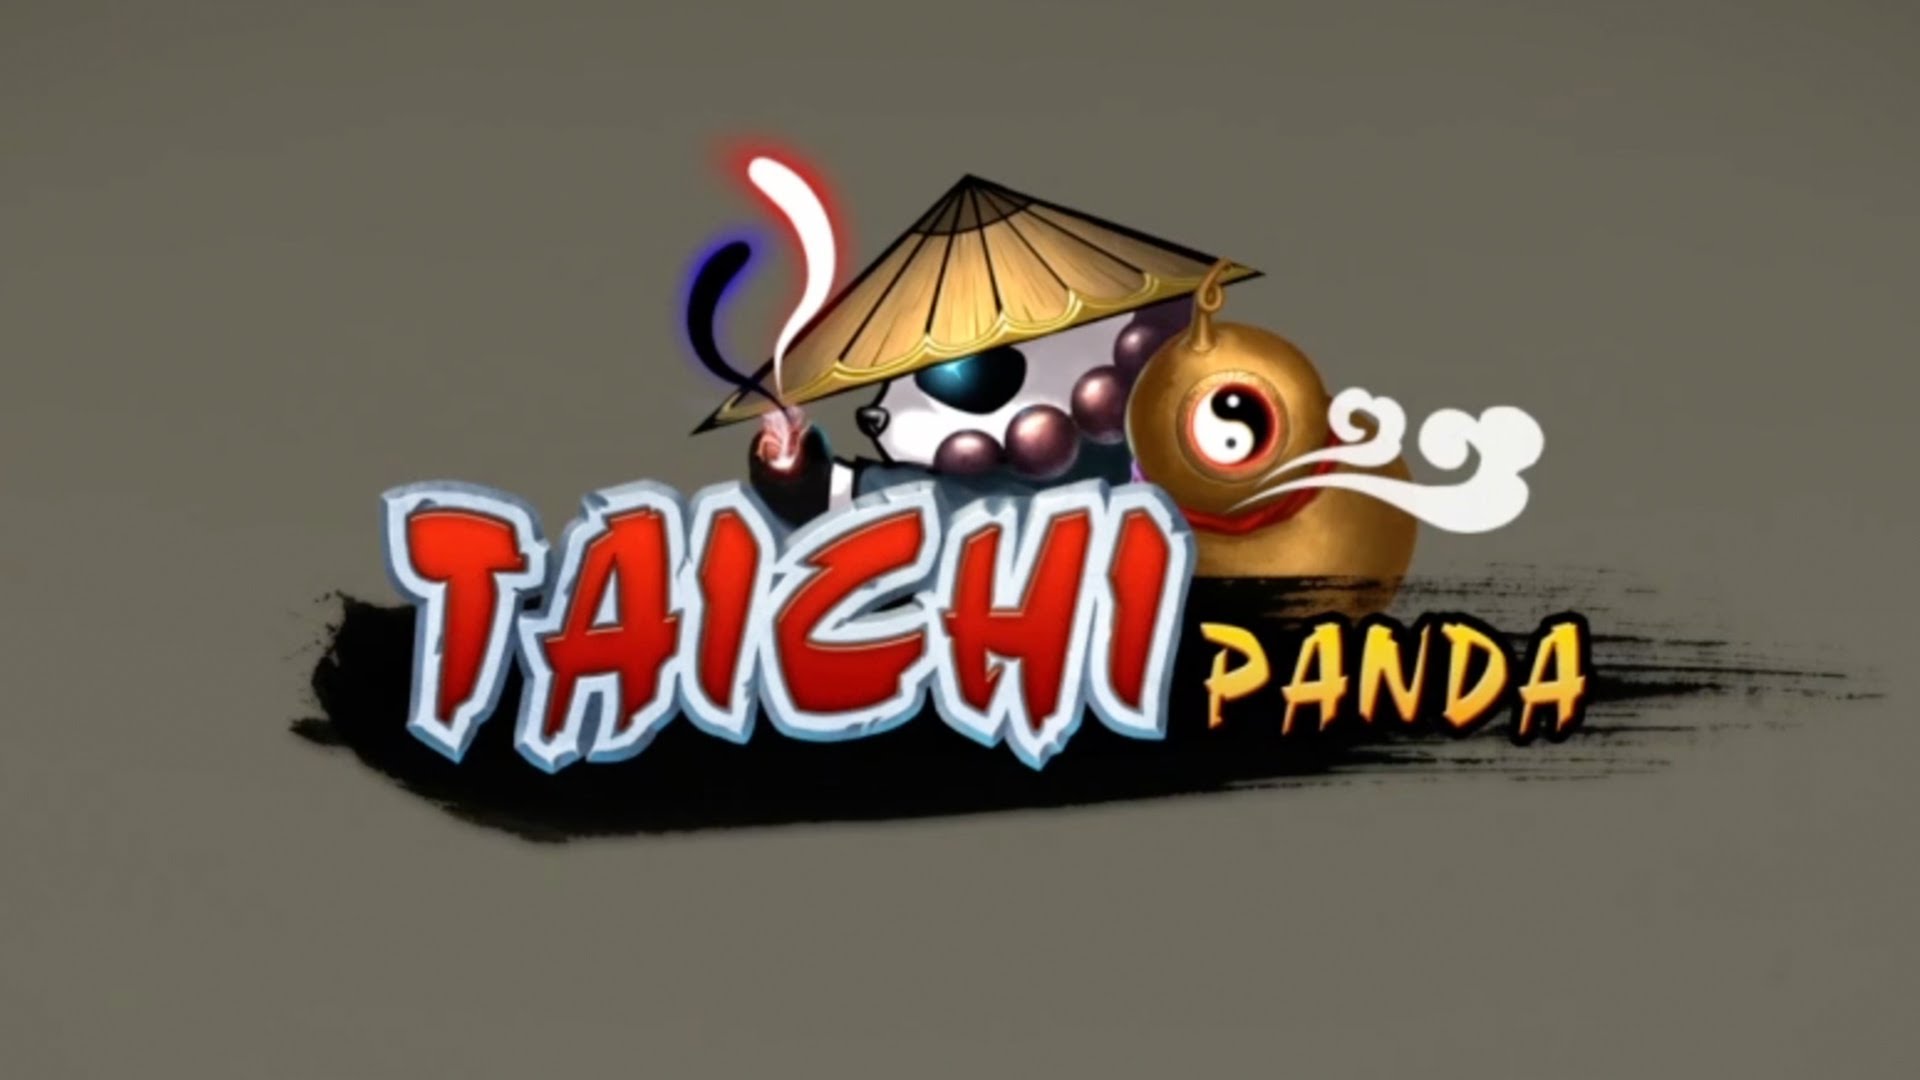 Taichi Panda #23